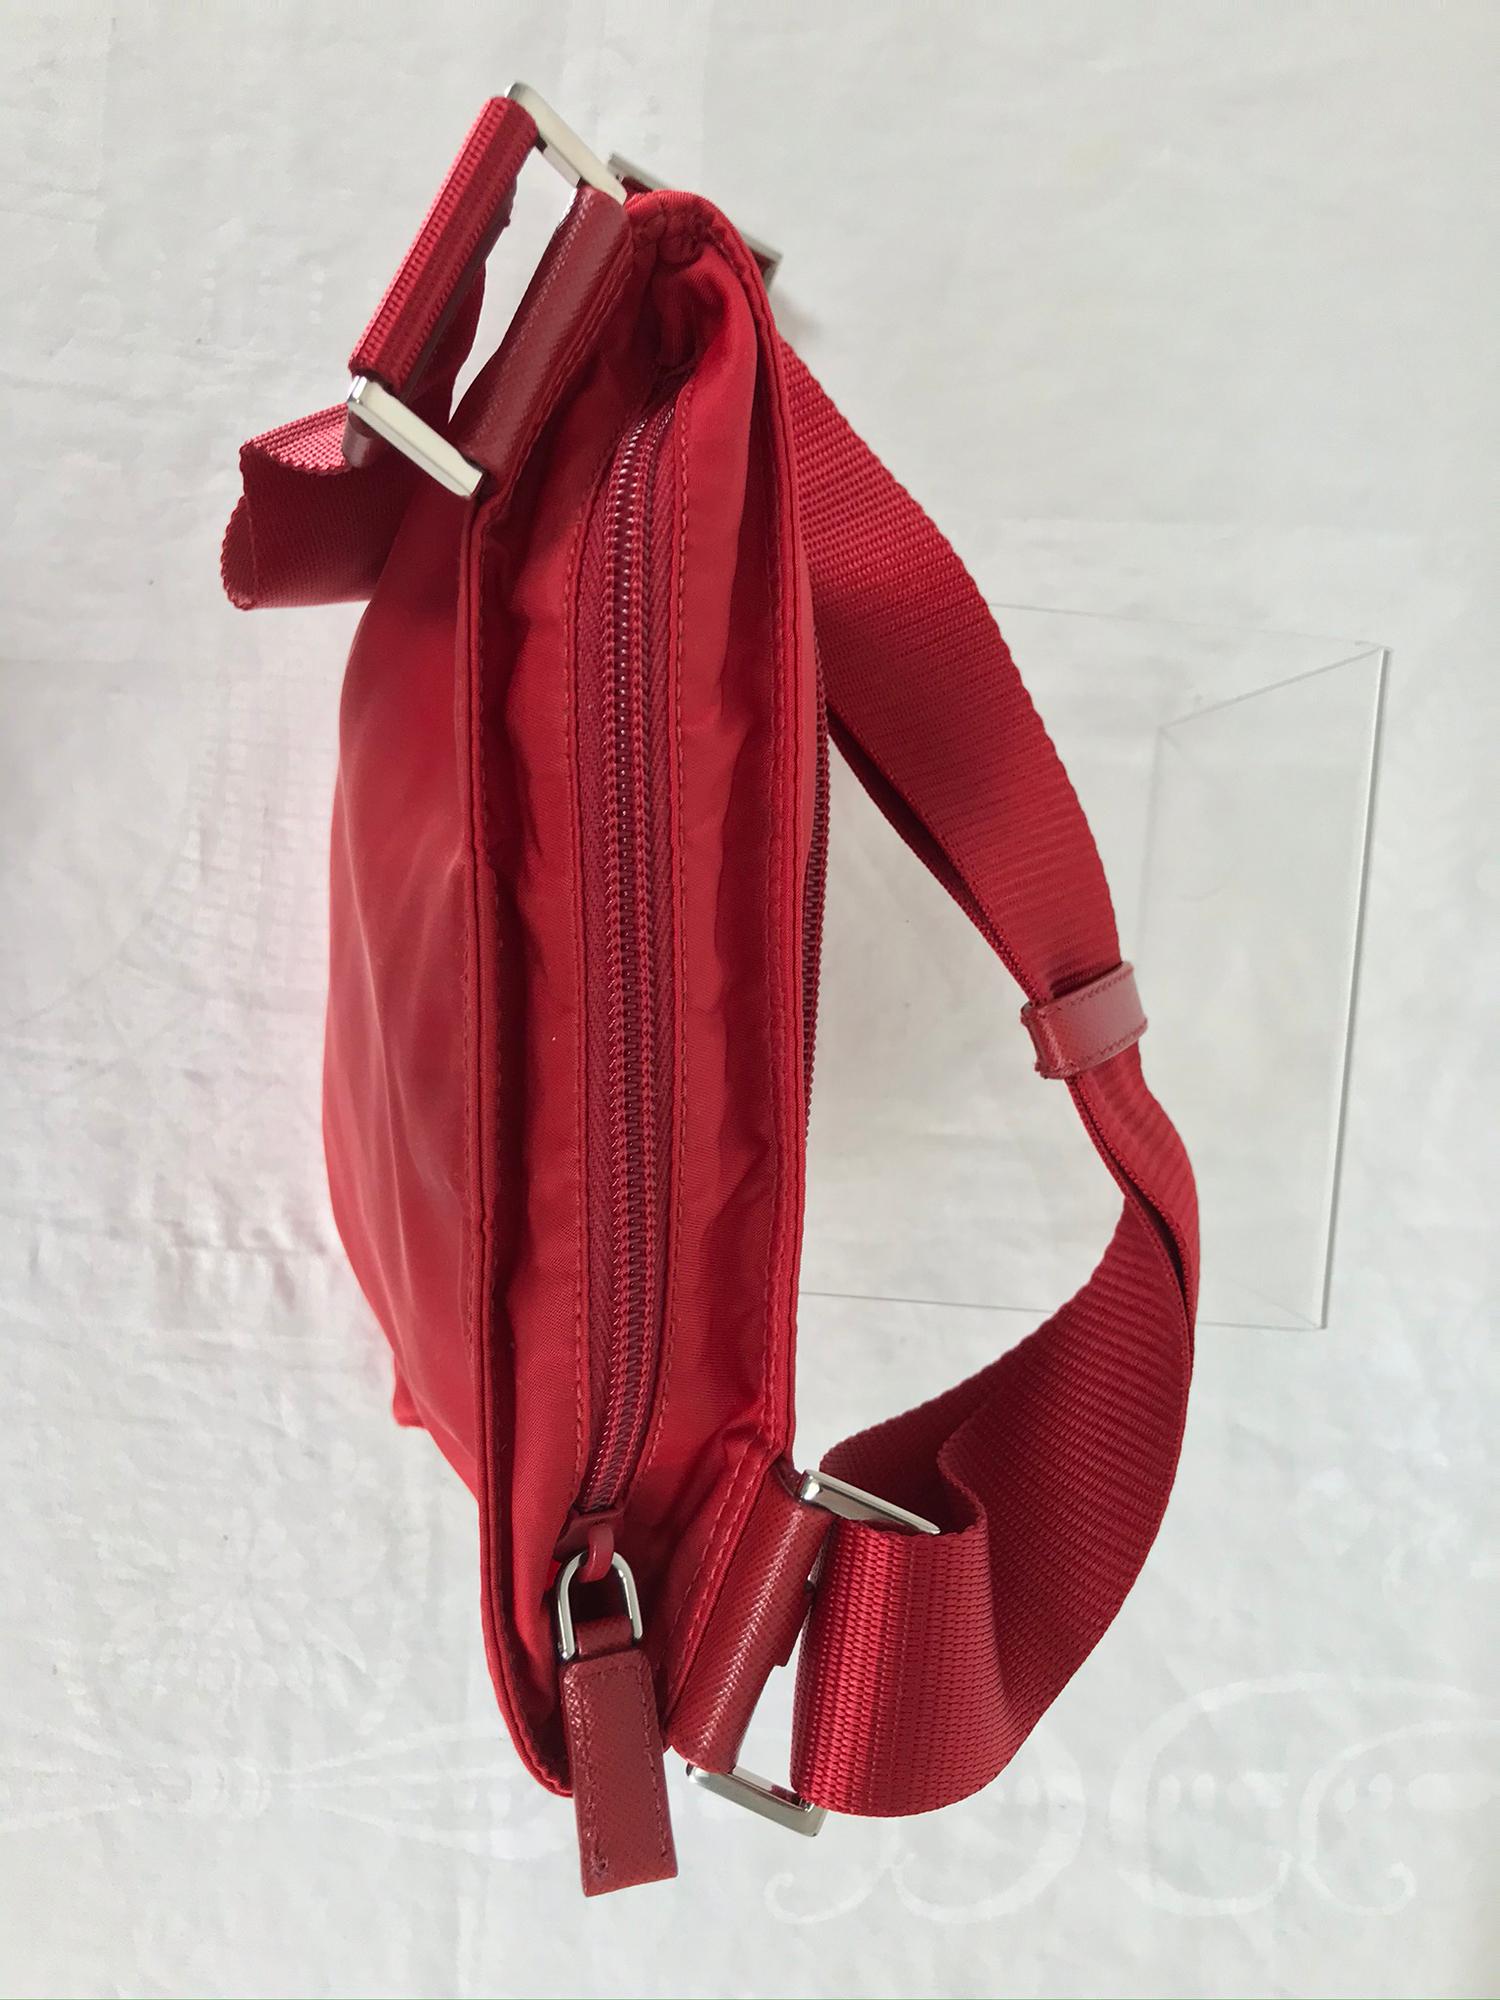 Women's or Men's Prada Small Nylon Cross Body Handbag in Red